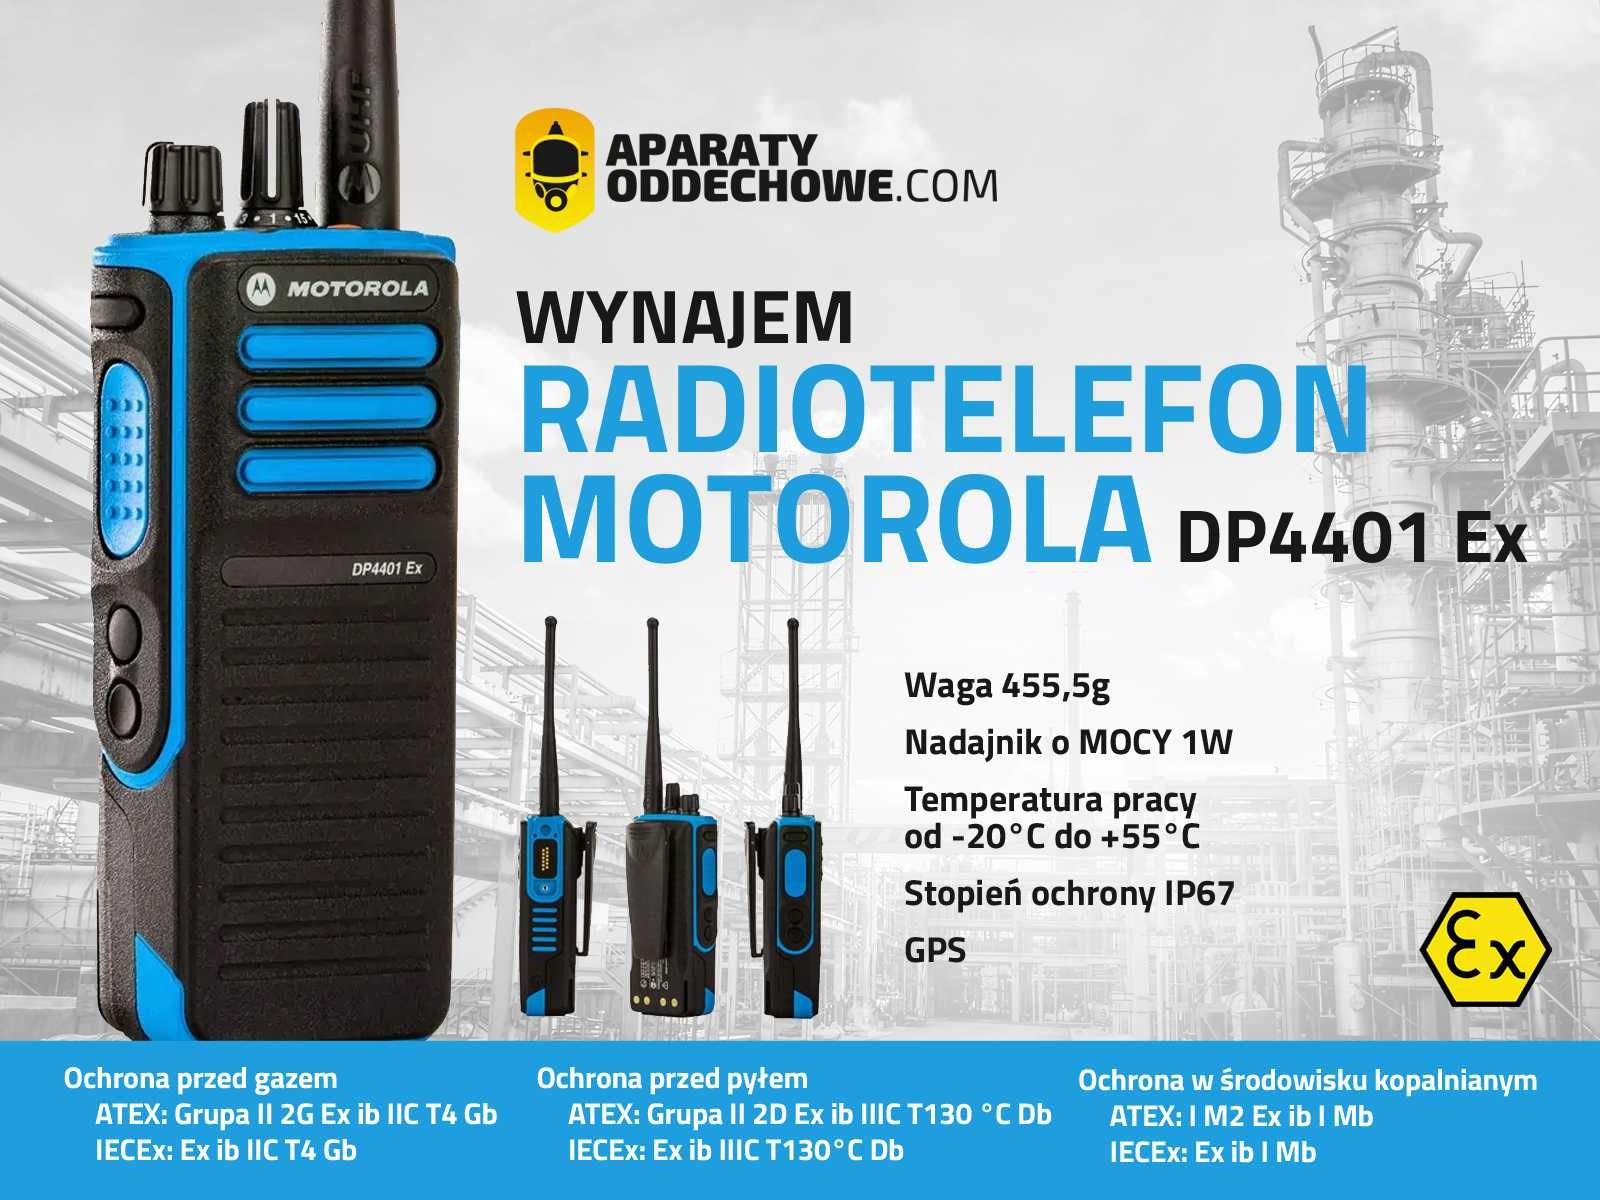 Radiotelefony Motorola DP4401 EX ATEX wynajem